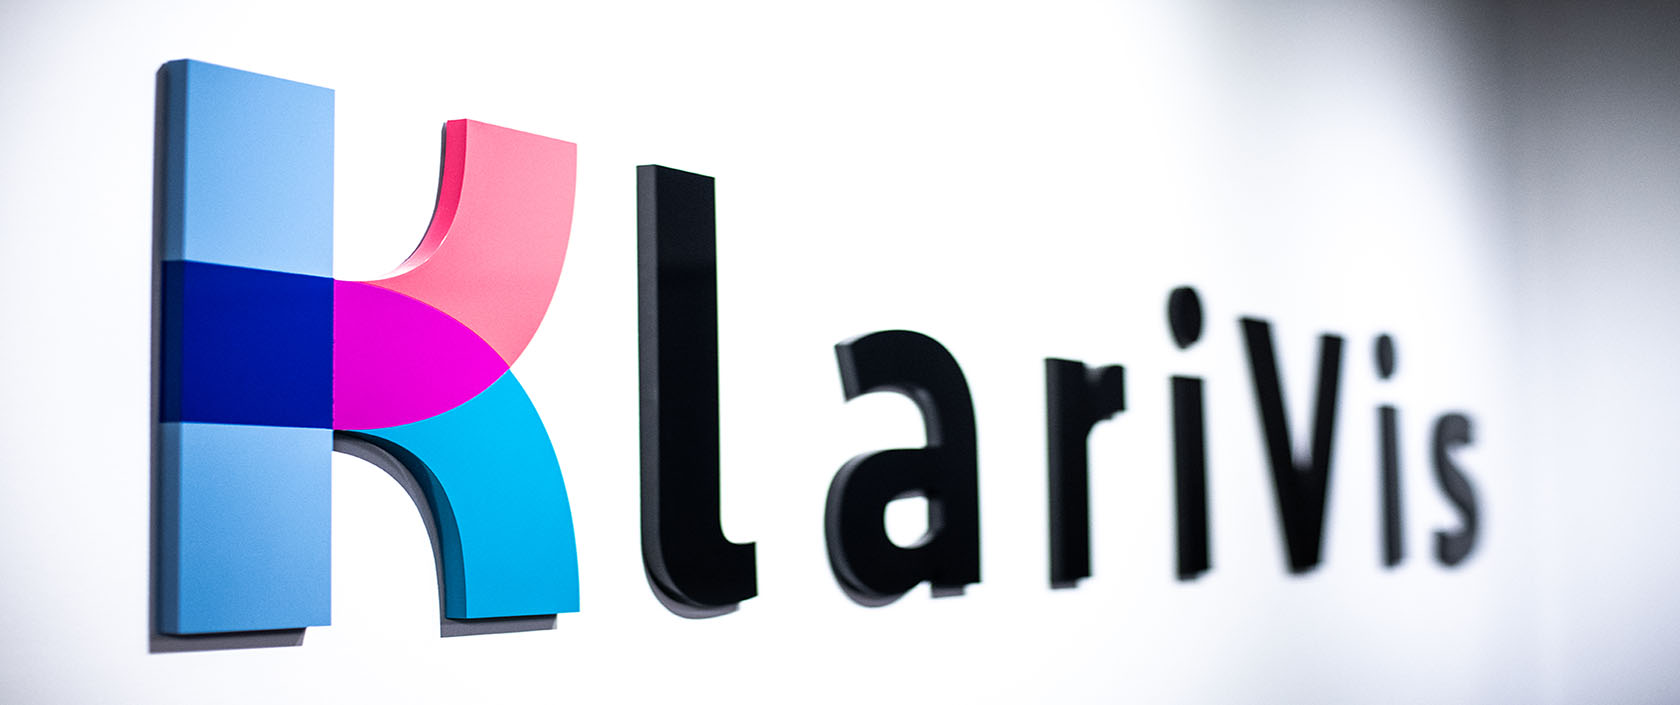 KlariVis Logo Sign